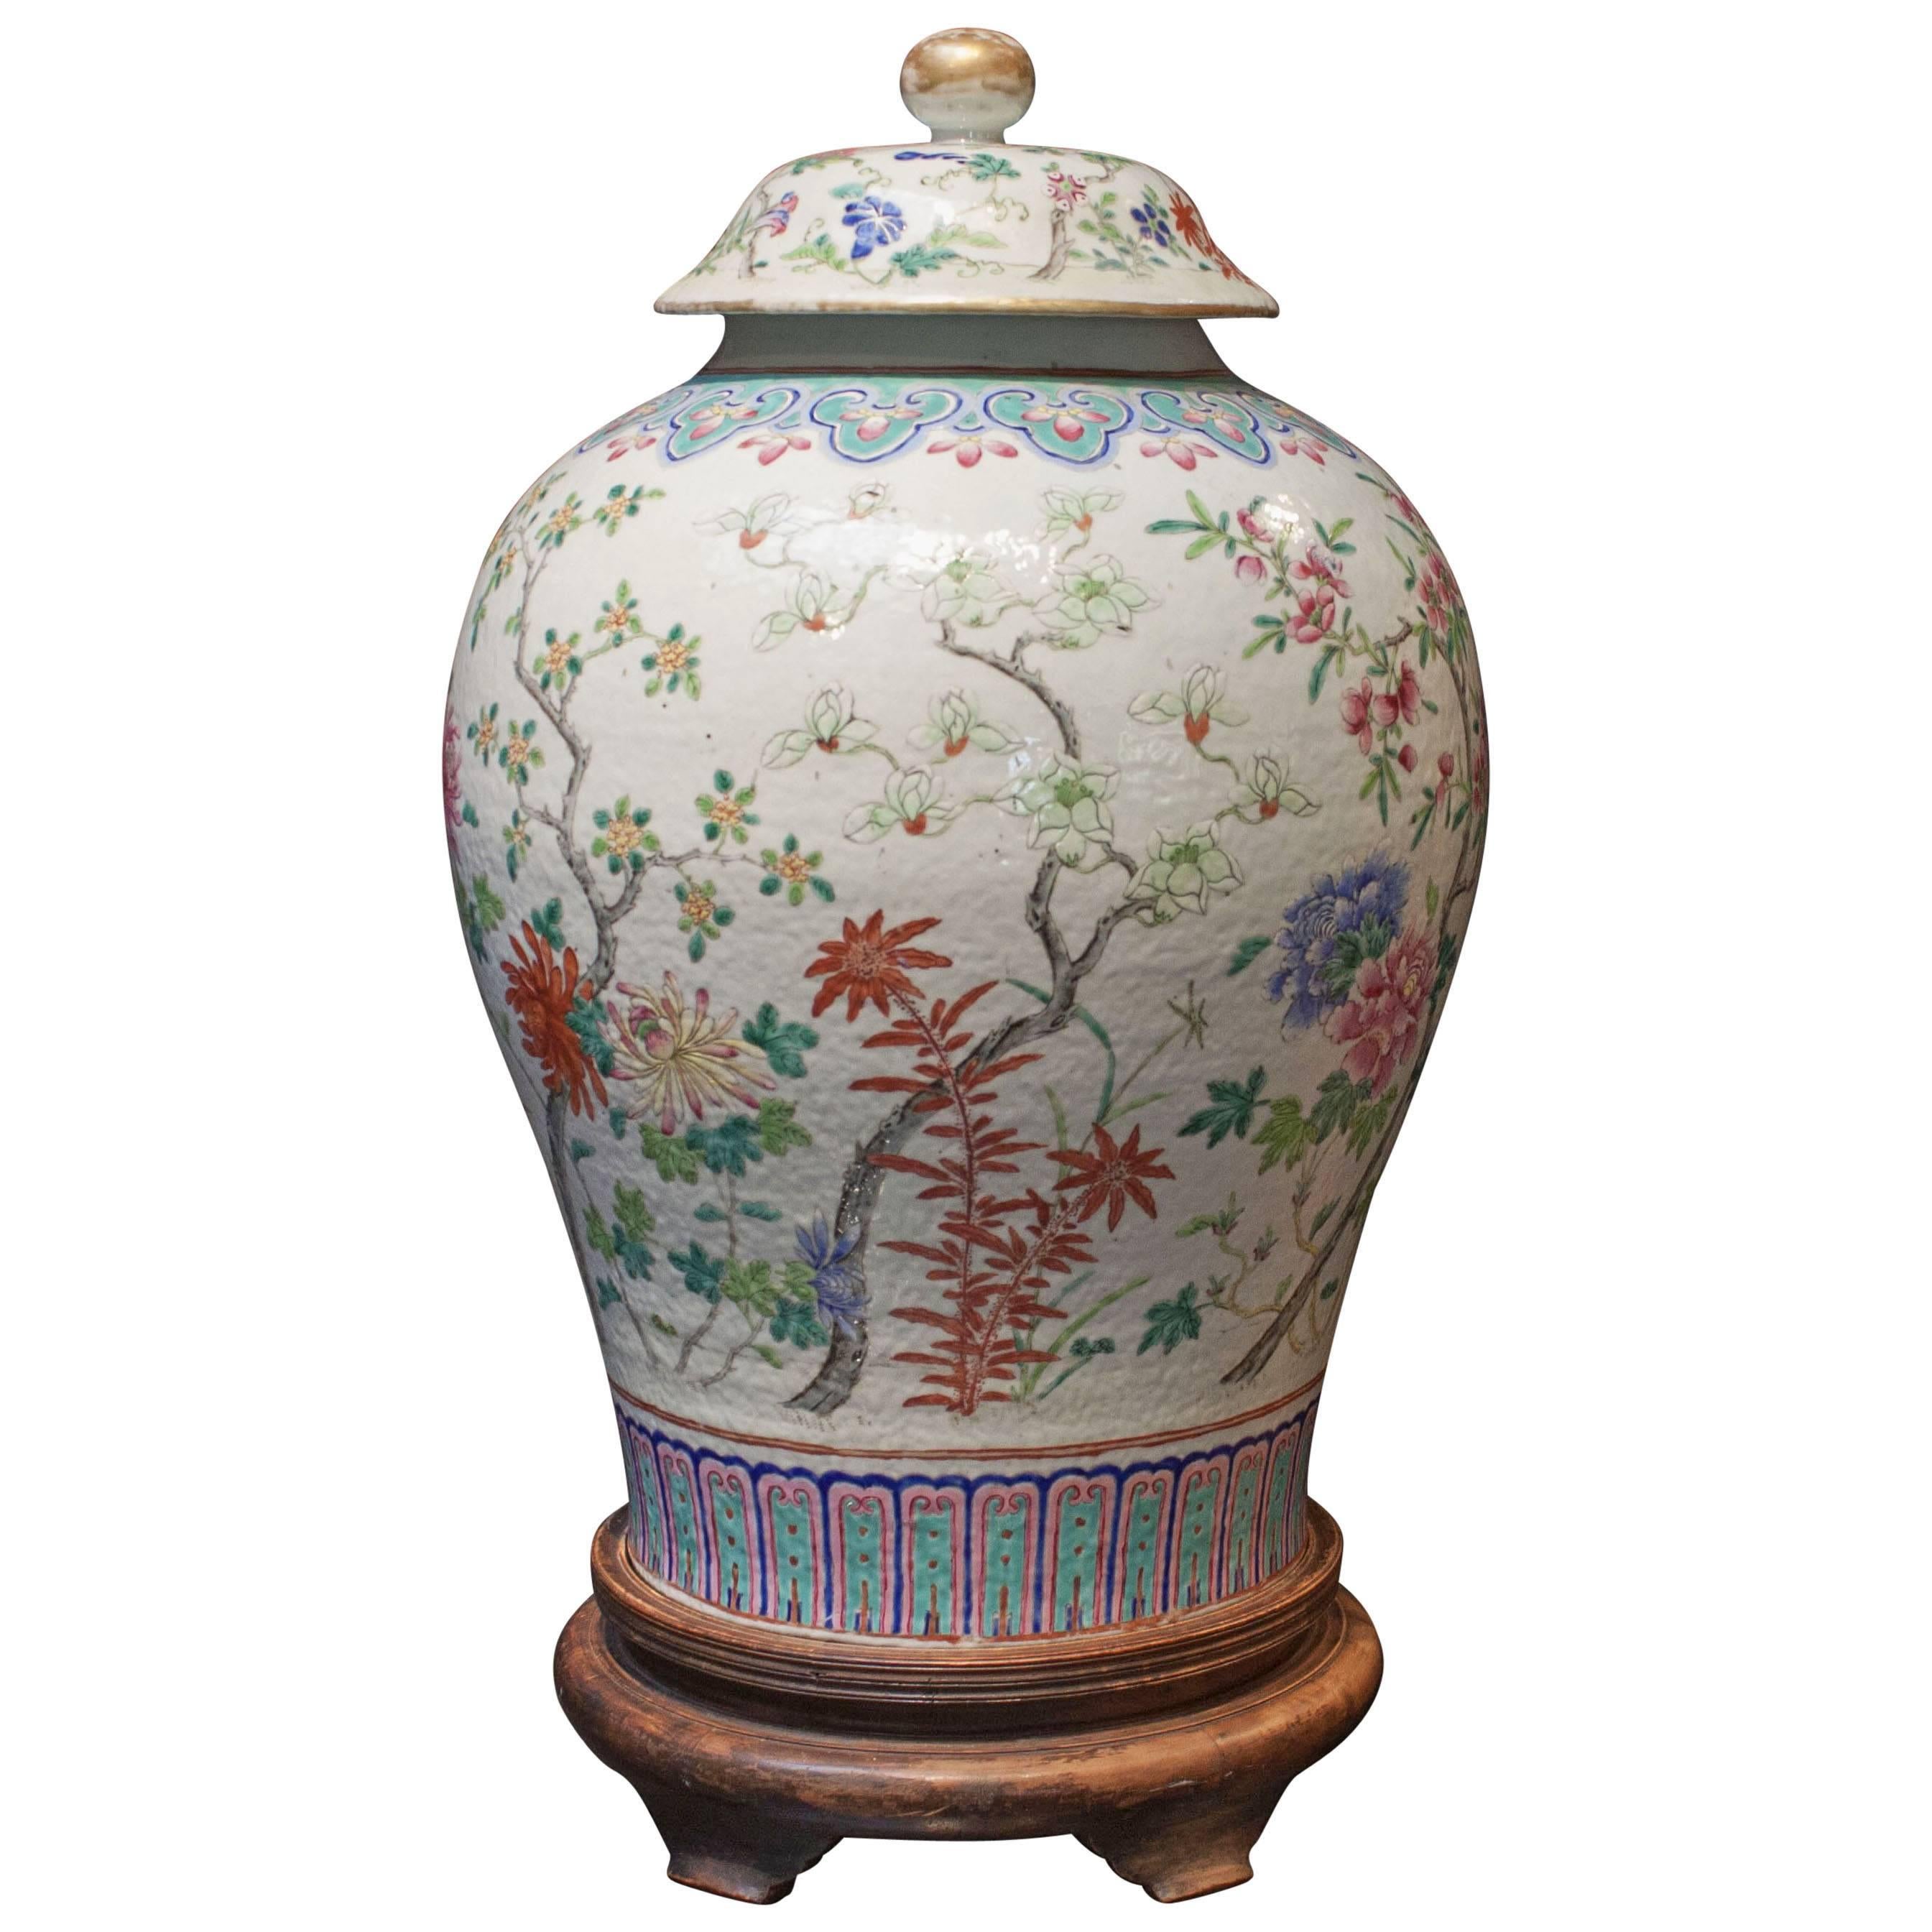 Massive Chinese Famille Rose Enameled Porcelain Baluster Covered Jar